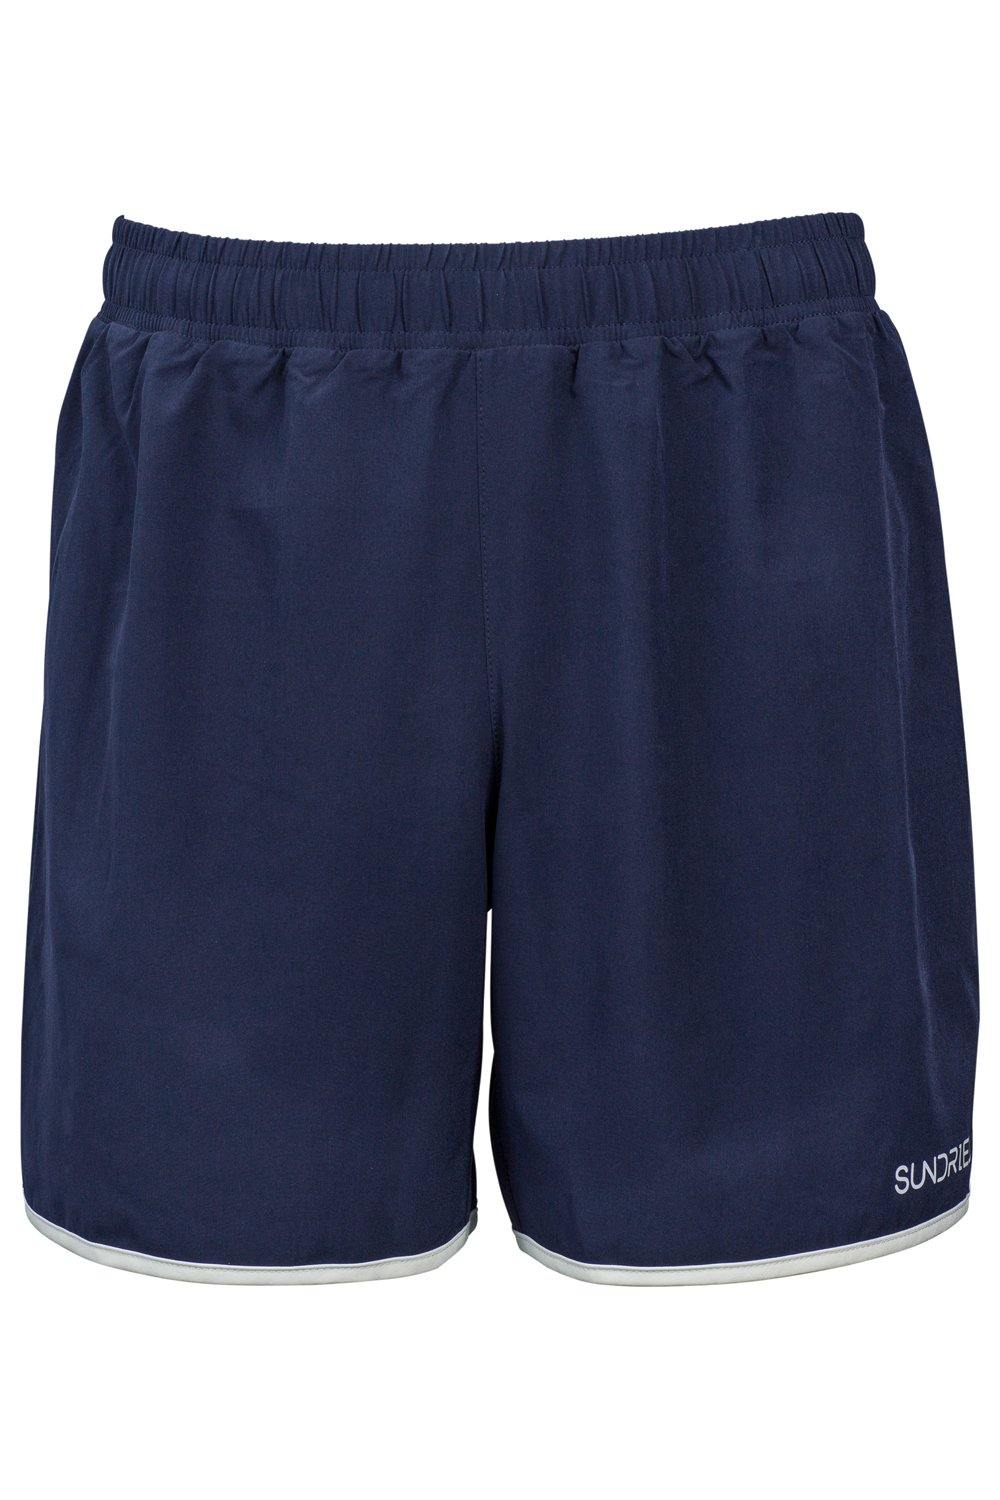 Sundried Legacy Men's 5" Running Shorts Shorts S Navy SD0241 S Navy Activewear